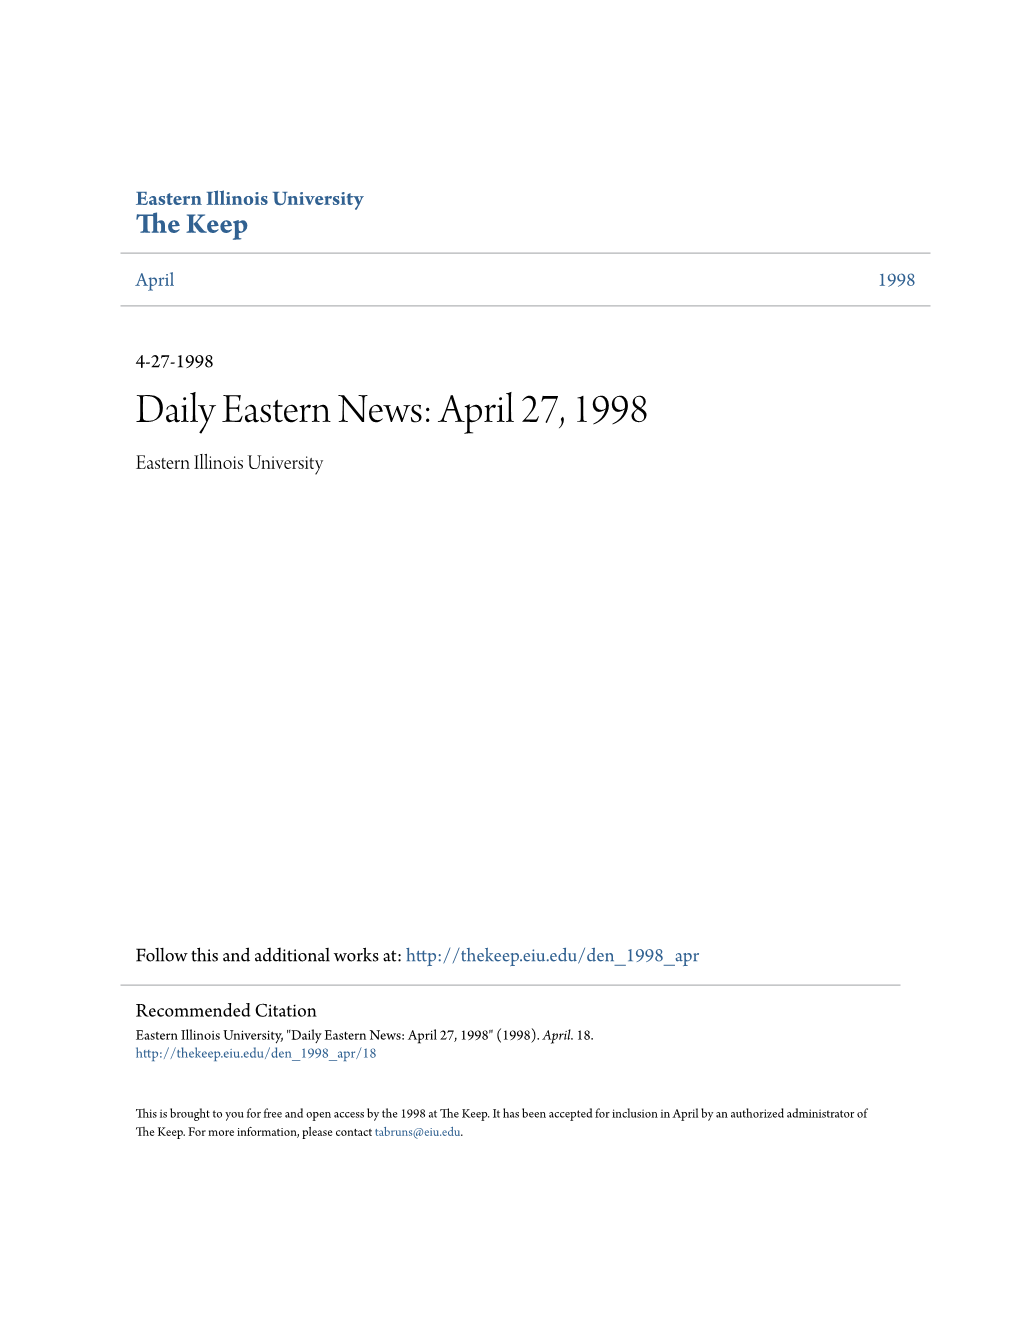 April 27, 1998 Eastern Illinois University